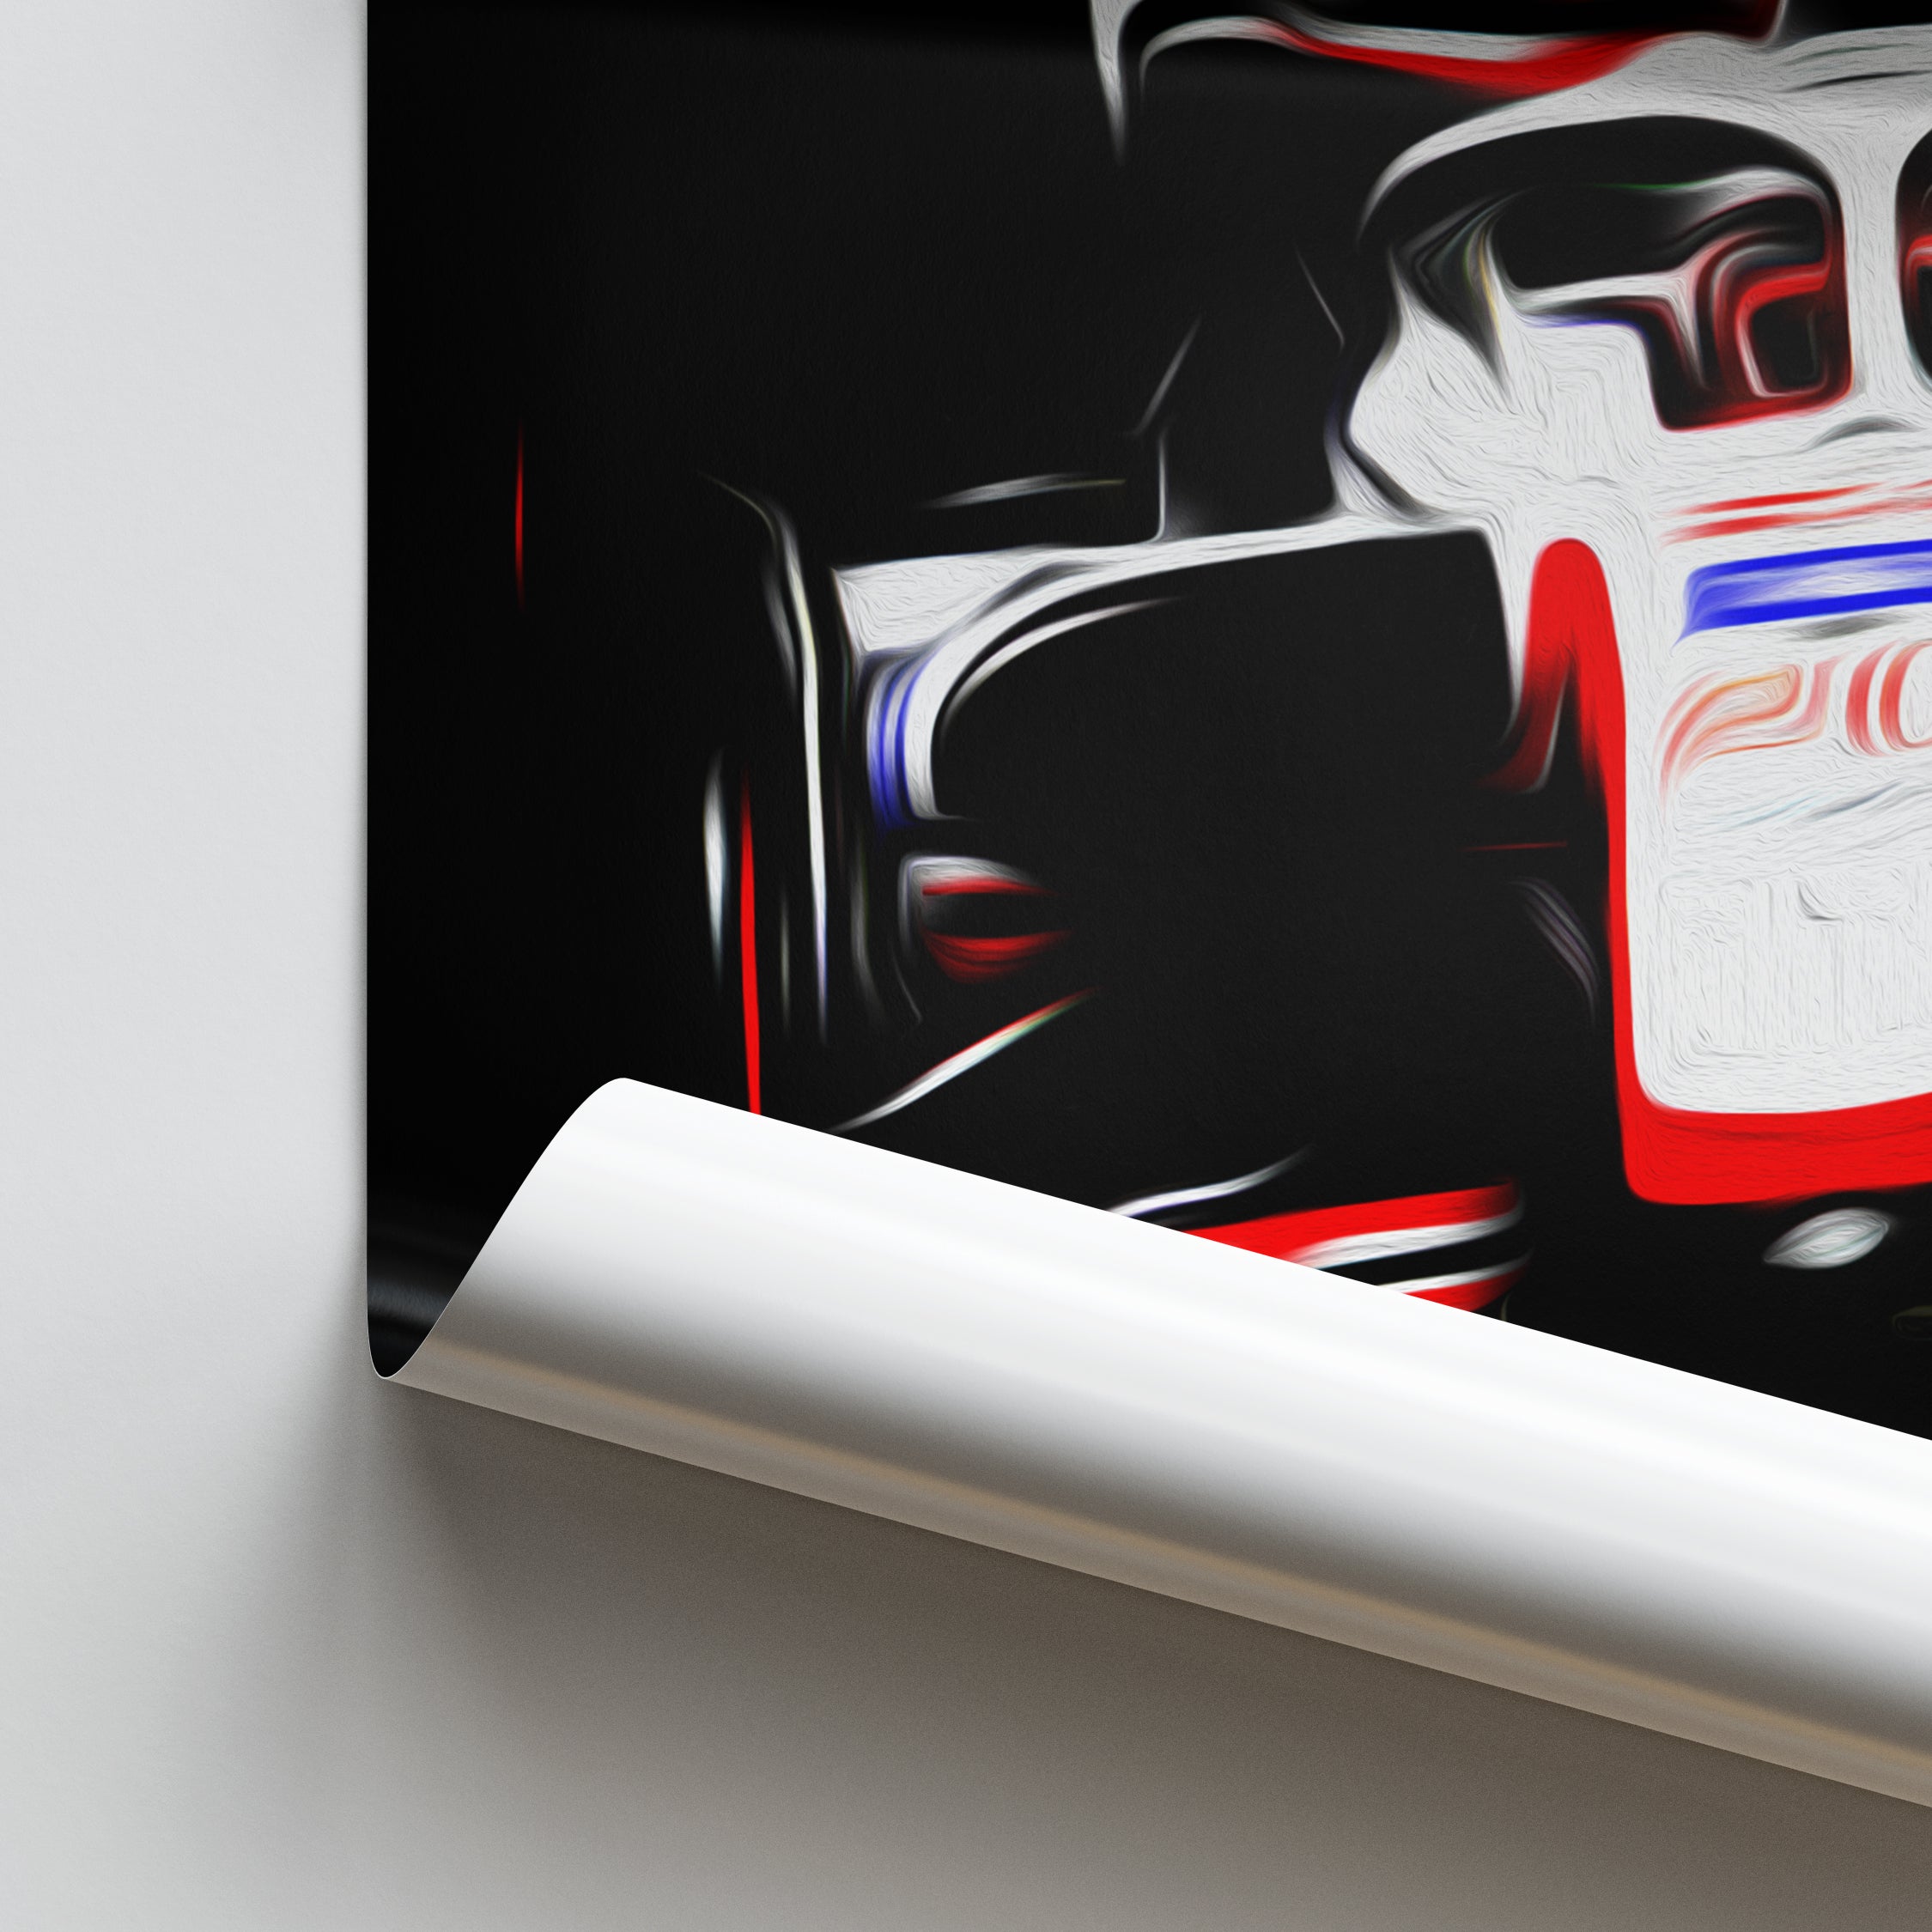 Haas VF22, Kevin Magnussen 2022 - Formula 1 Print